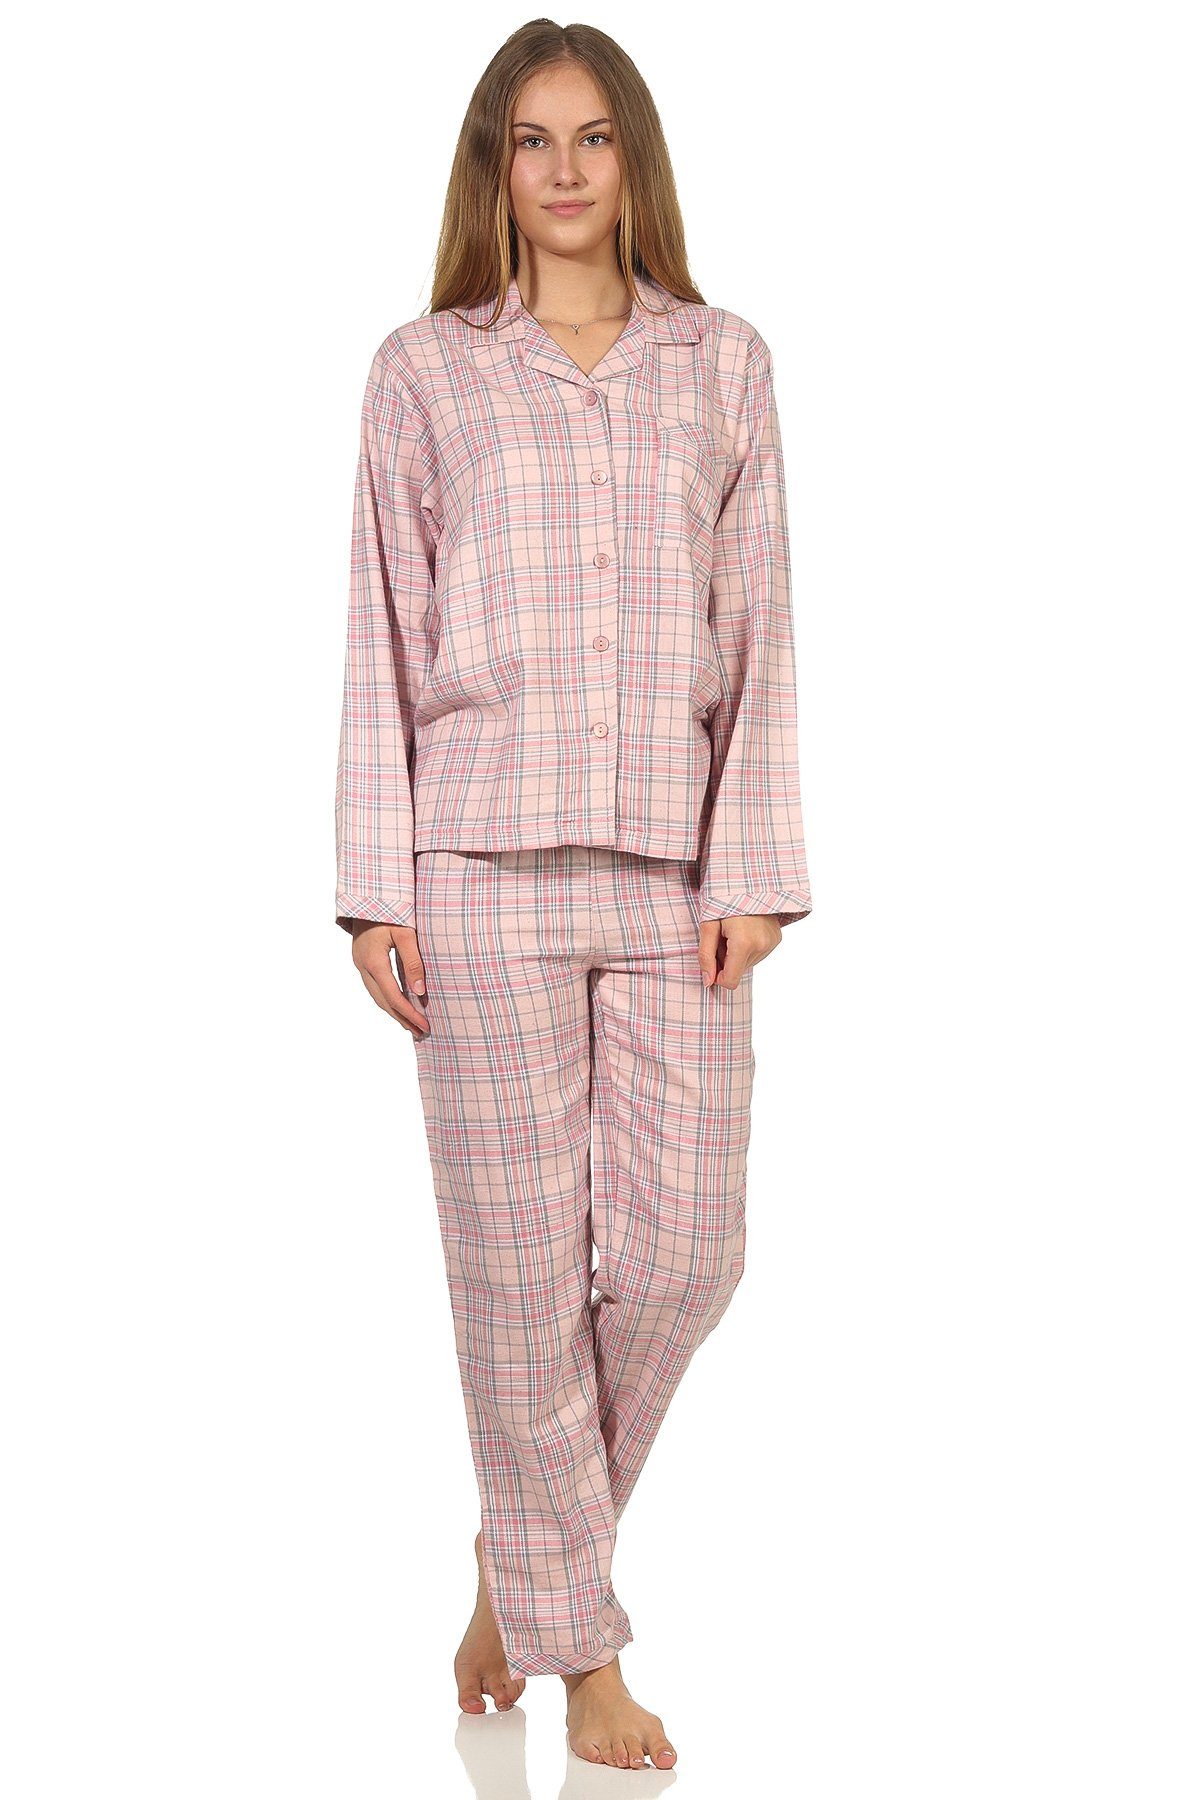 Flanell kariert rosa 202 602 15 Schlafanzug Damen Normann - langarm Pyjama